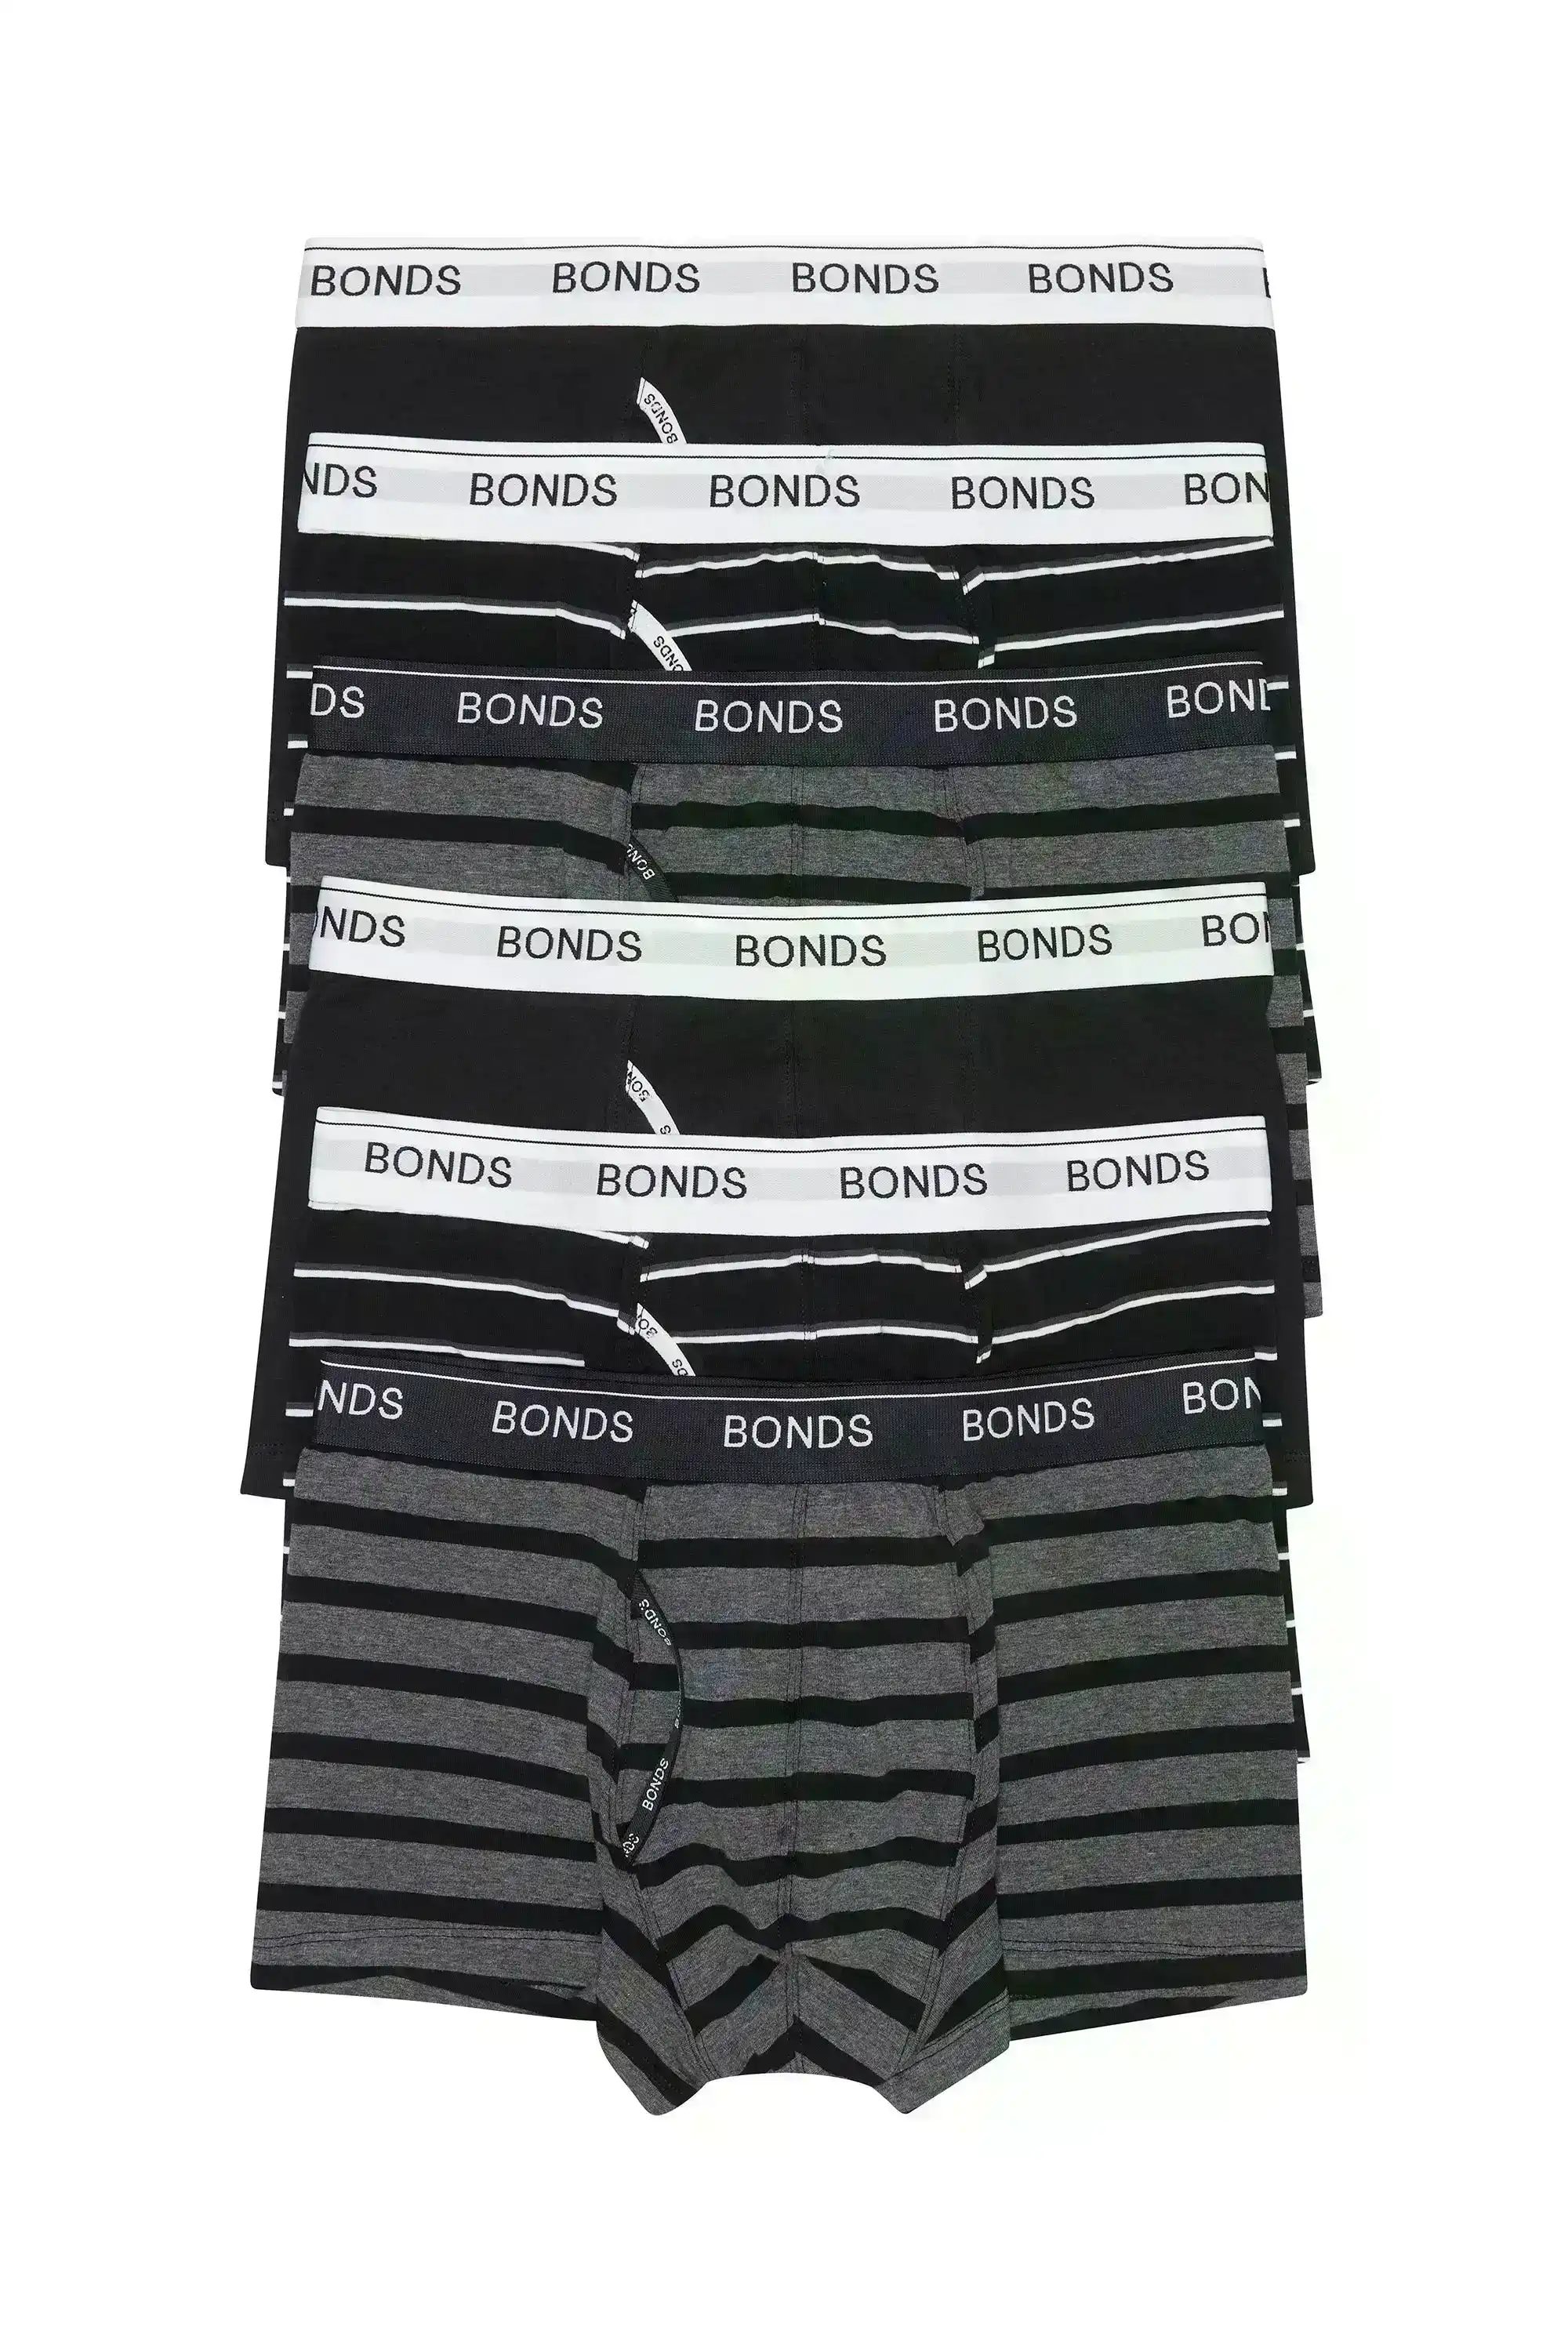 18 X Bonds Mens Guyfront Trunks Underwear Black / Grey Stripe